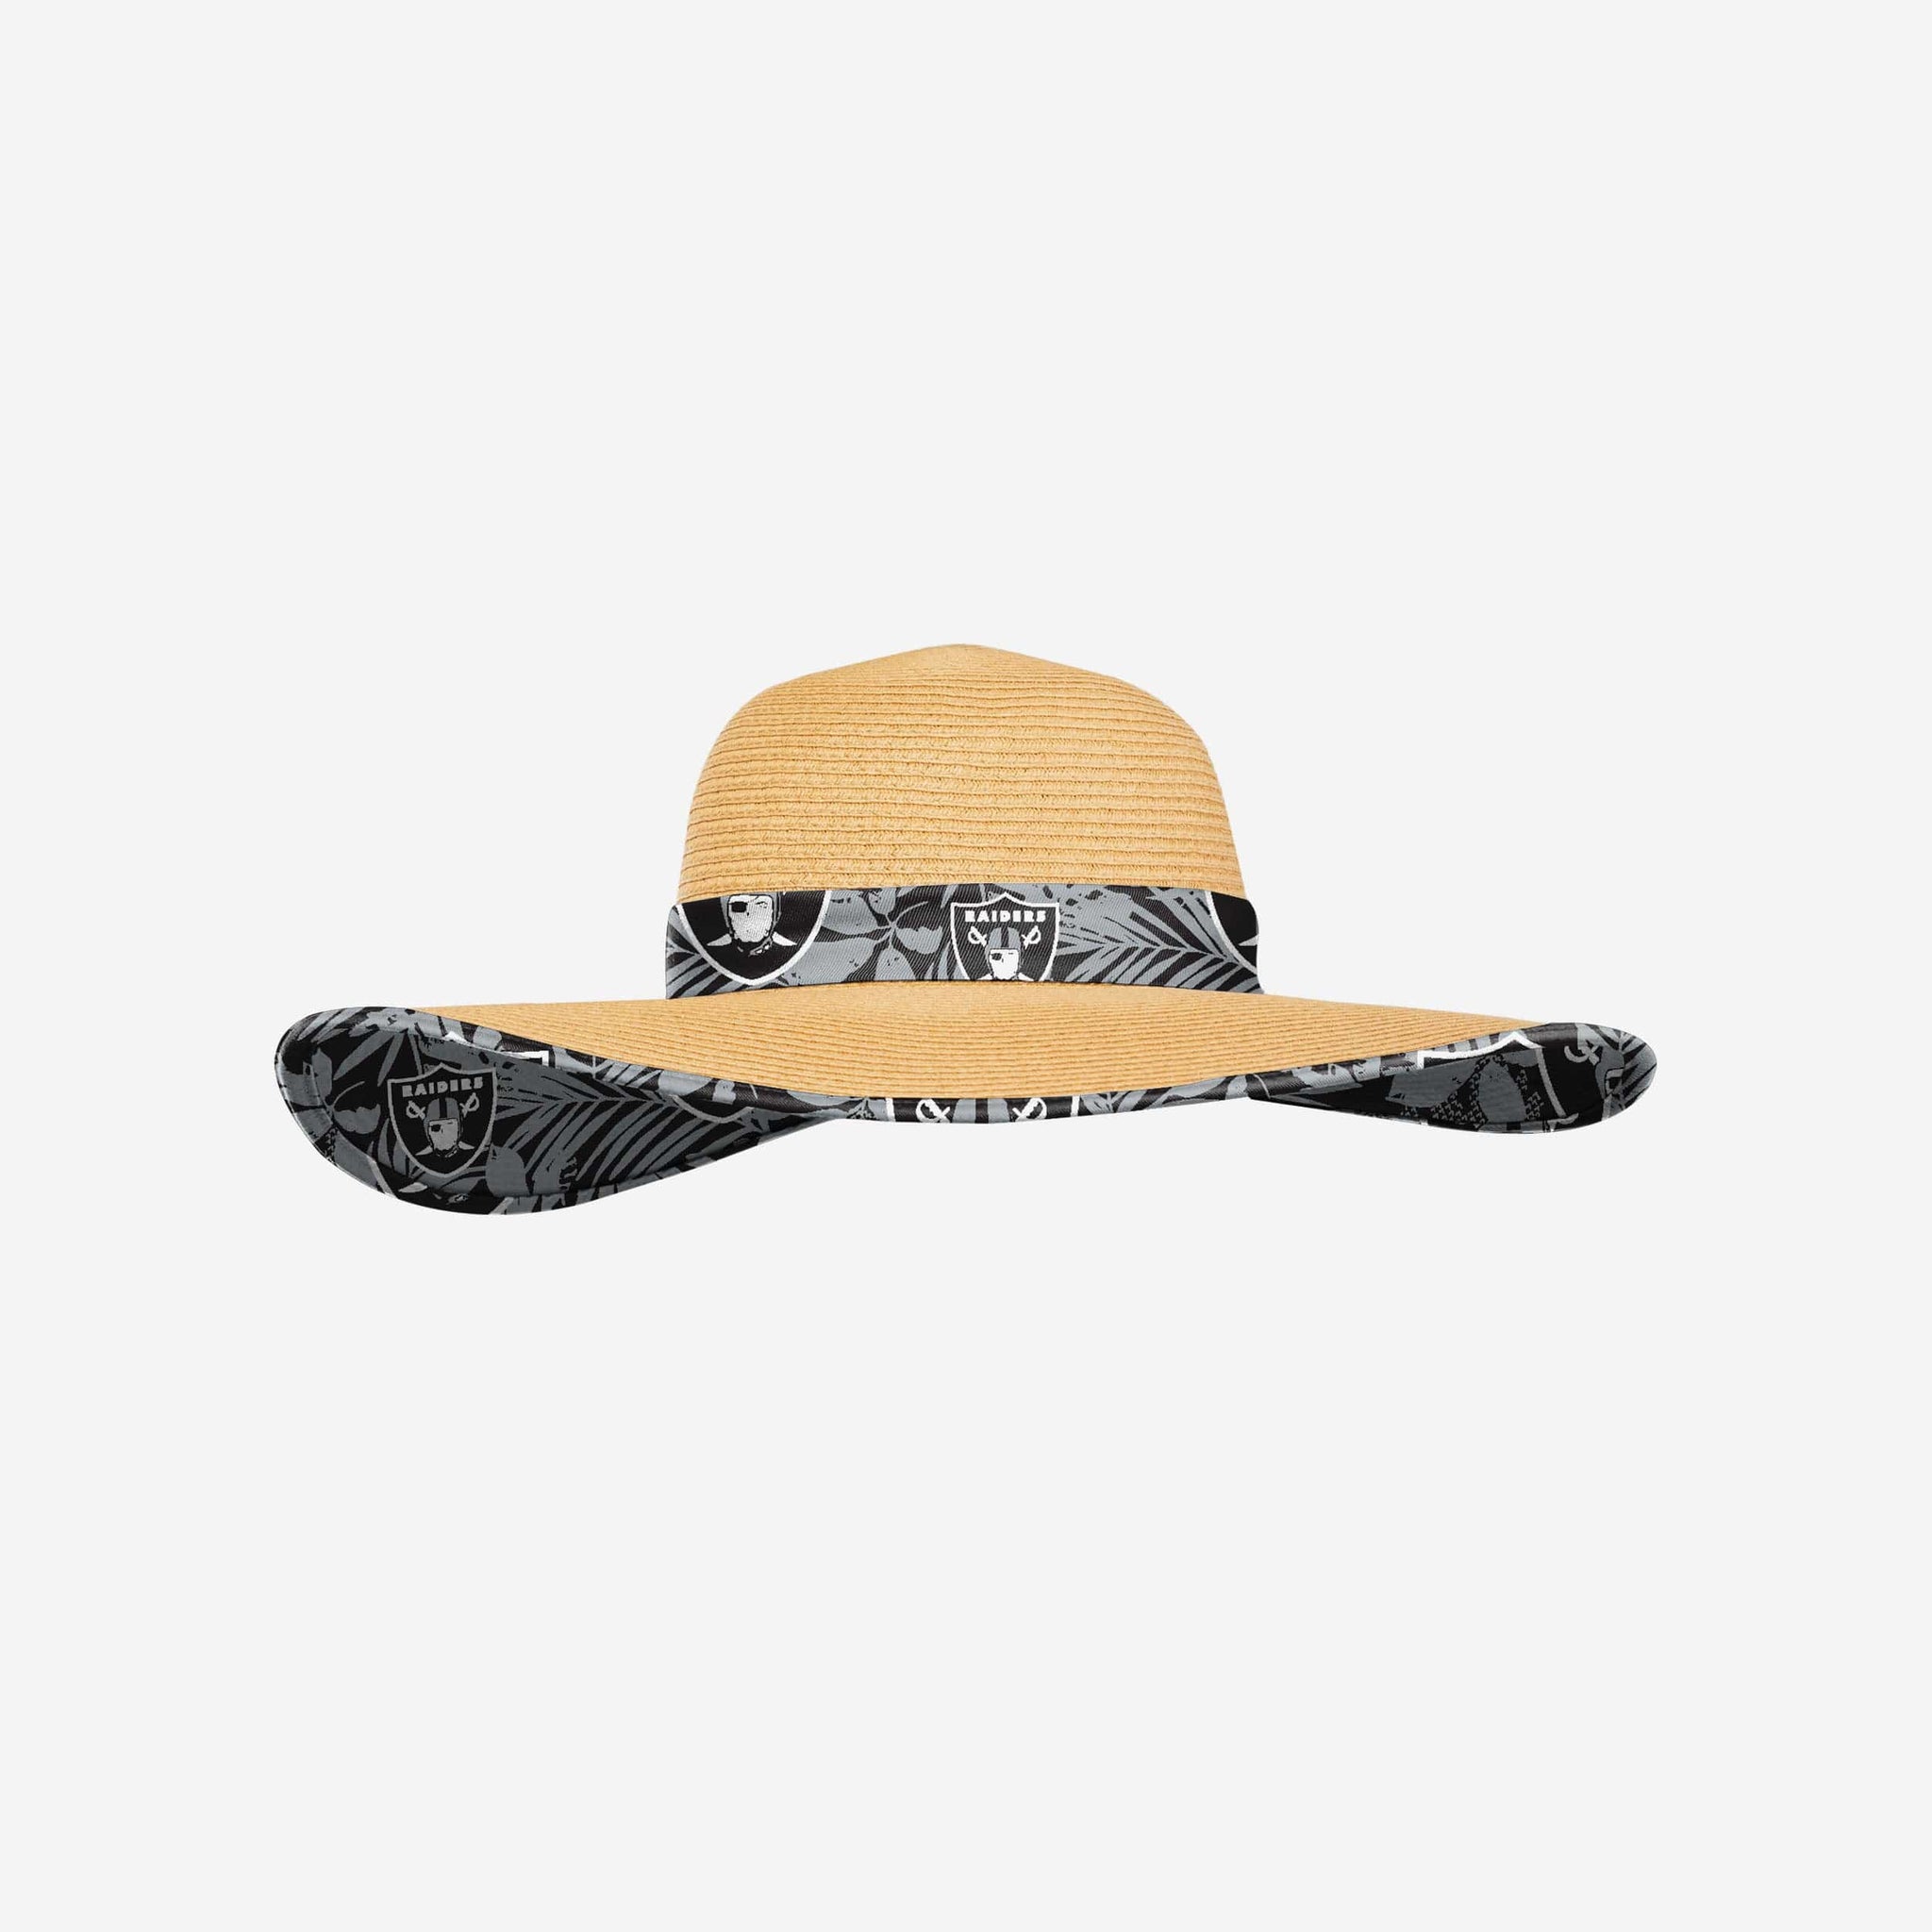 Raiders Straw Hat 